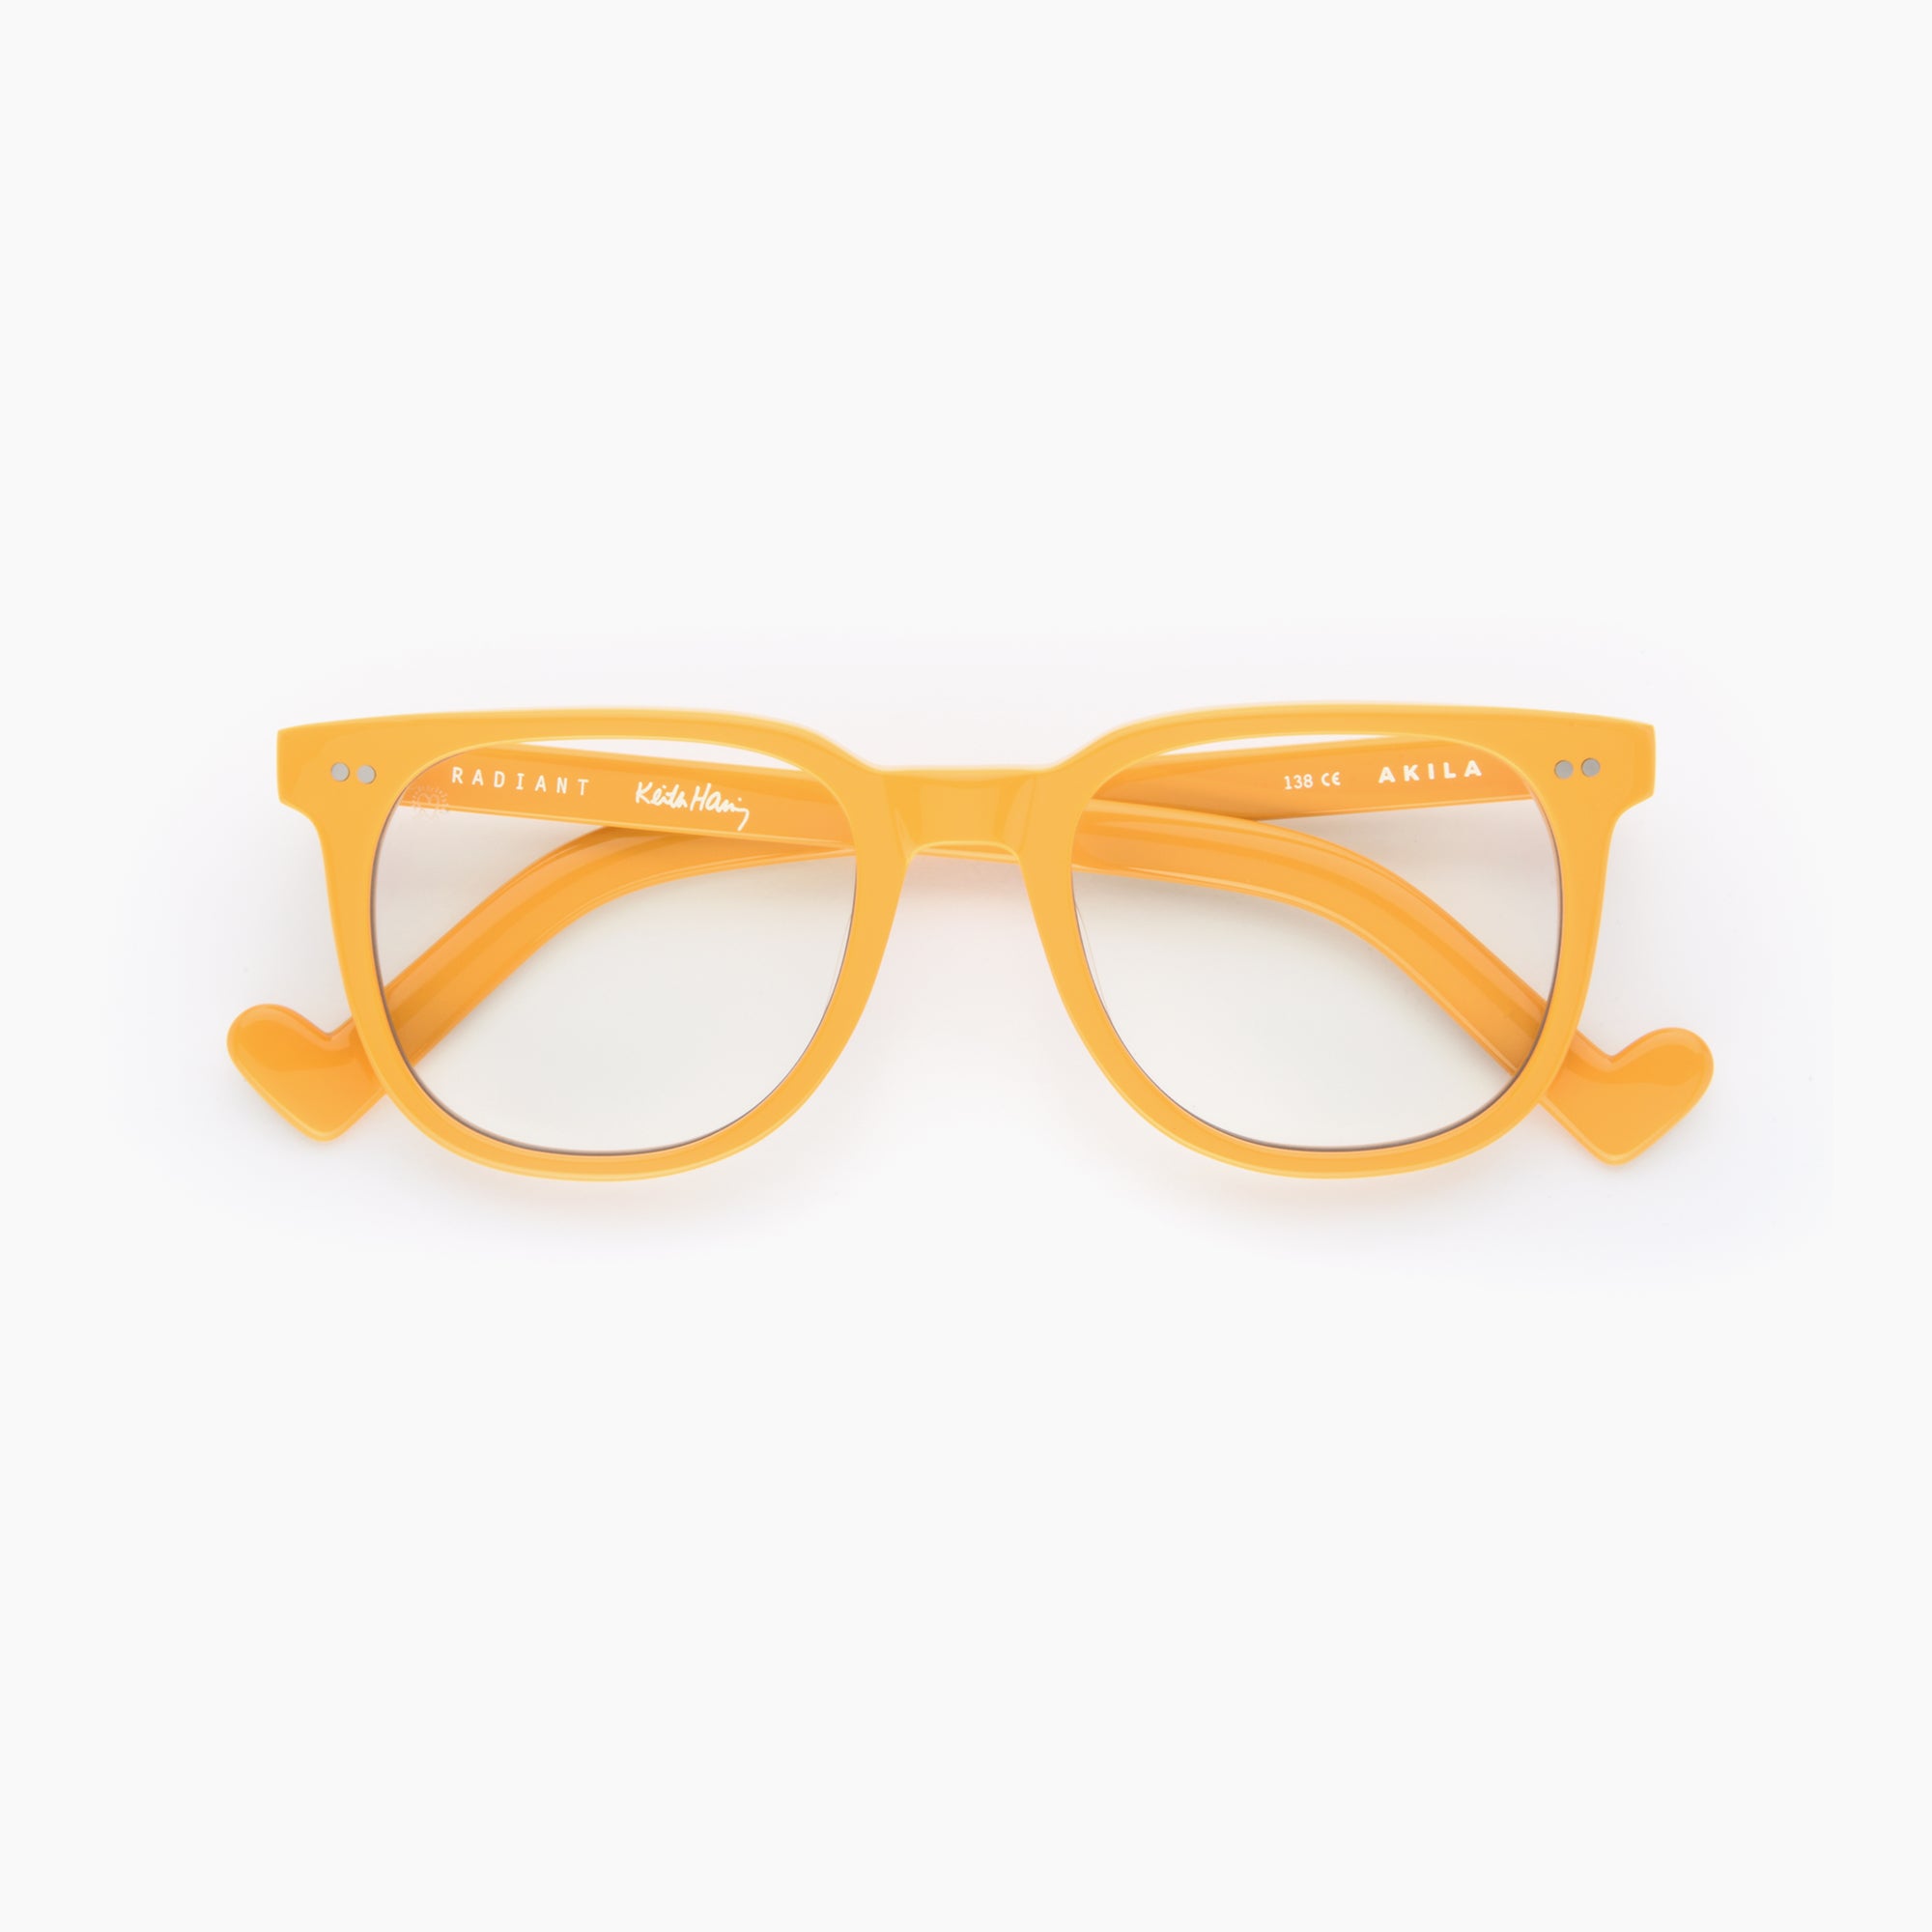 AKILA-Keith-Haring-eyewear-RadiantYellow01.jpg